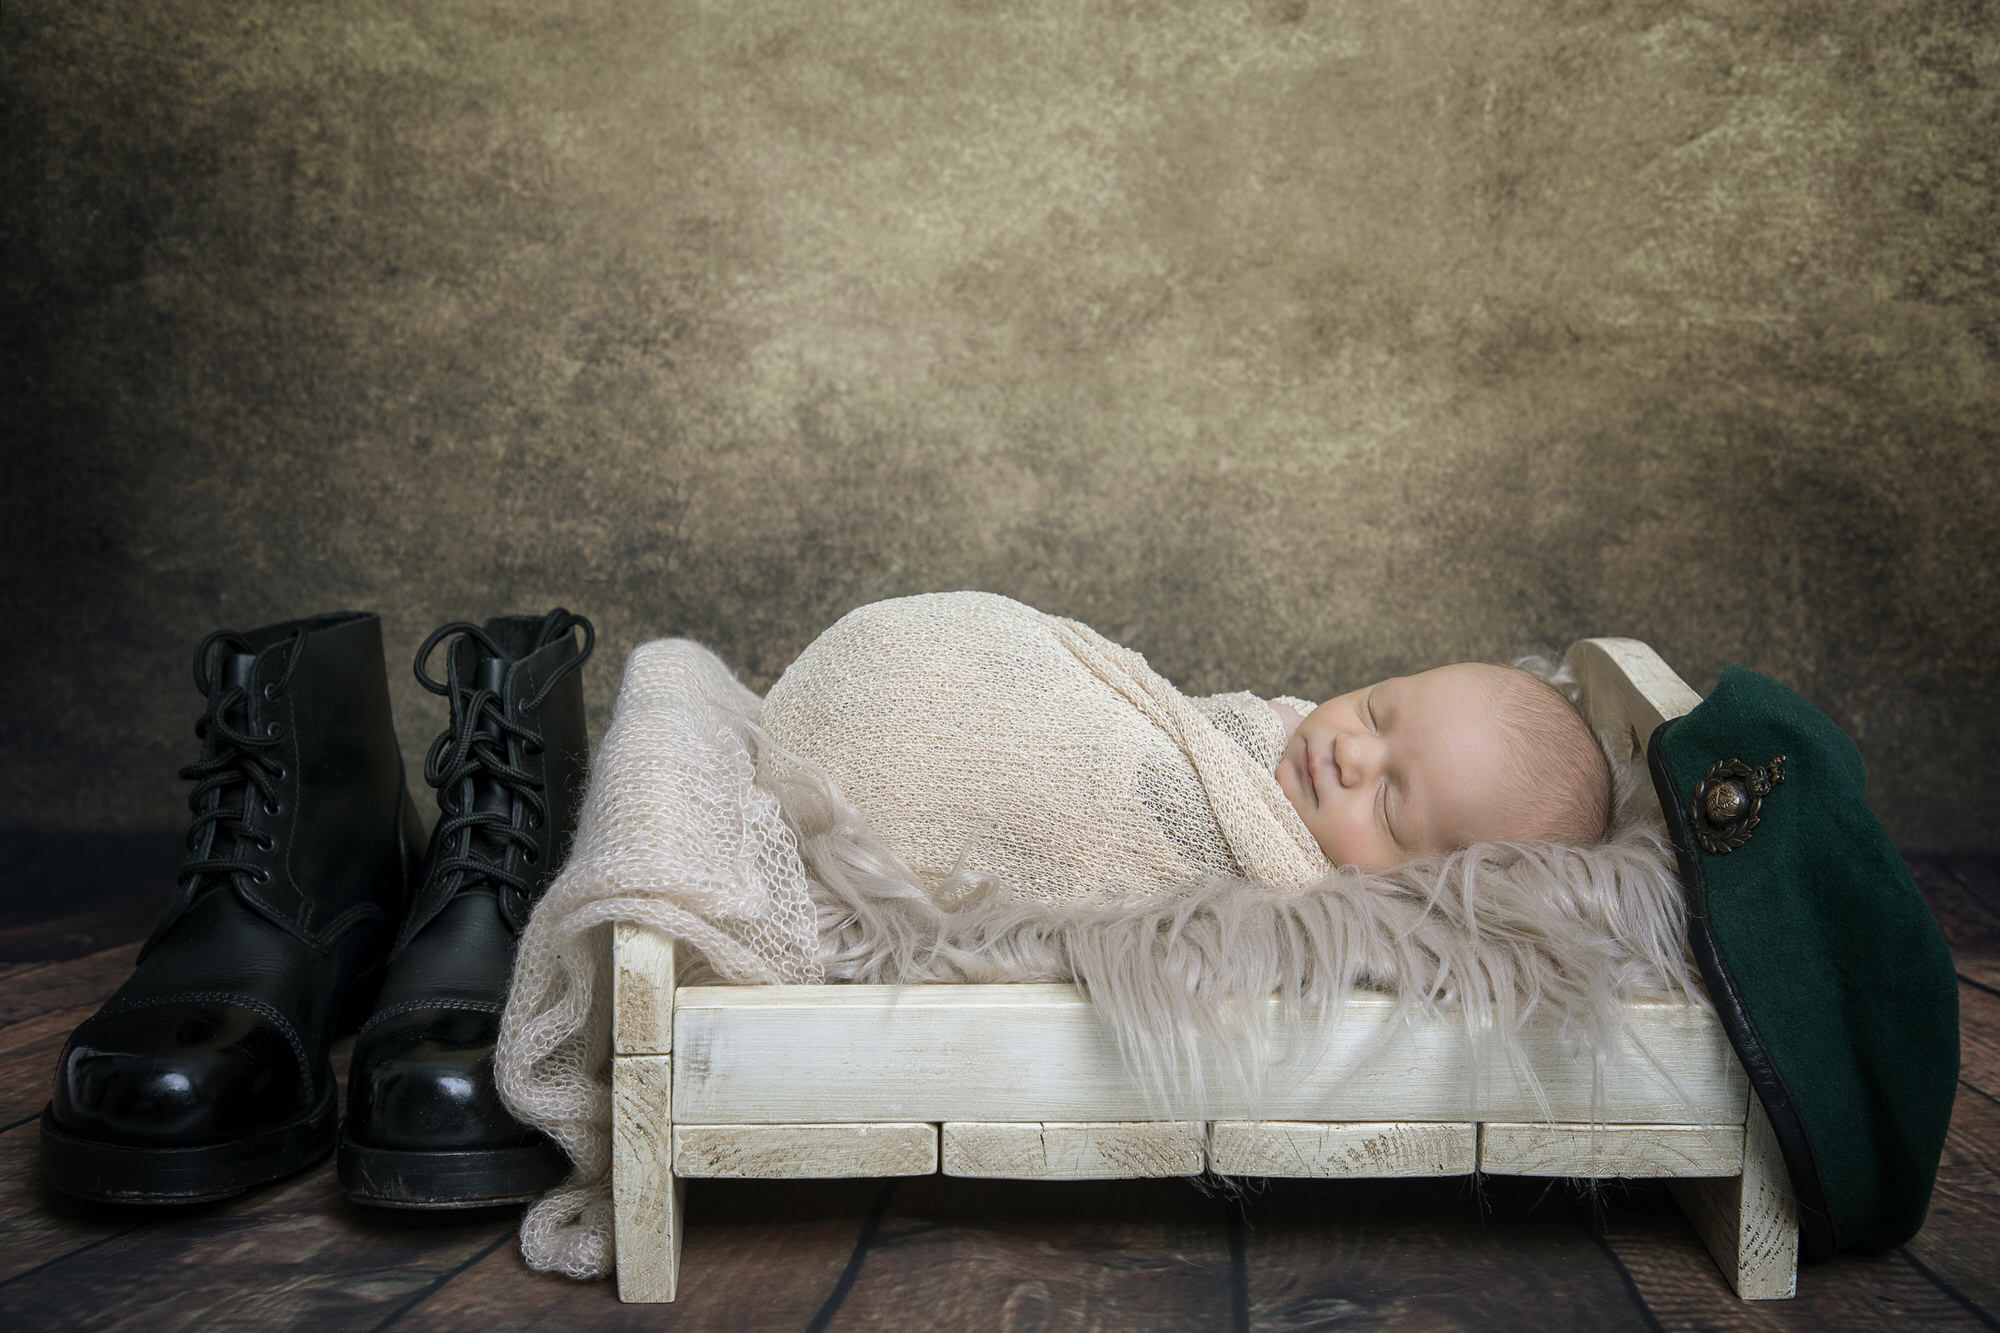 Newborn baby photography portrait taken in my studio in Whitchurch Hampshire